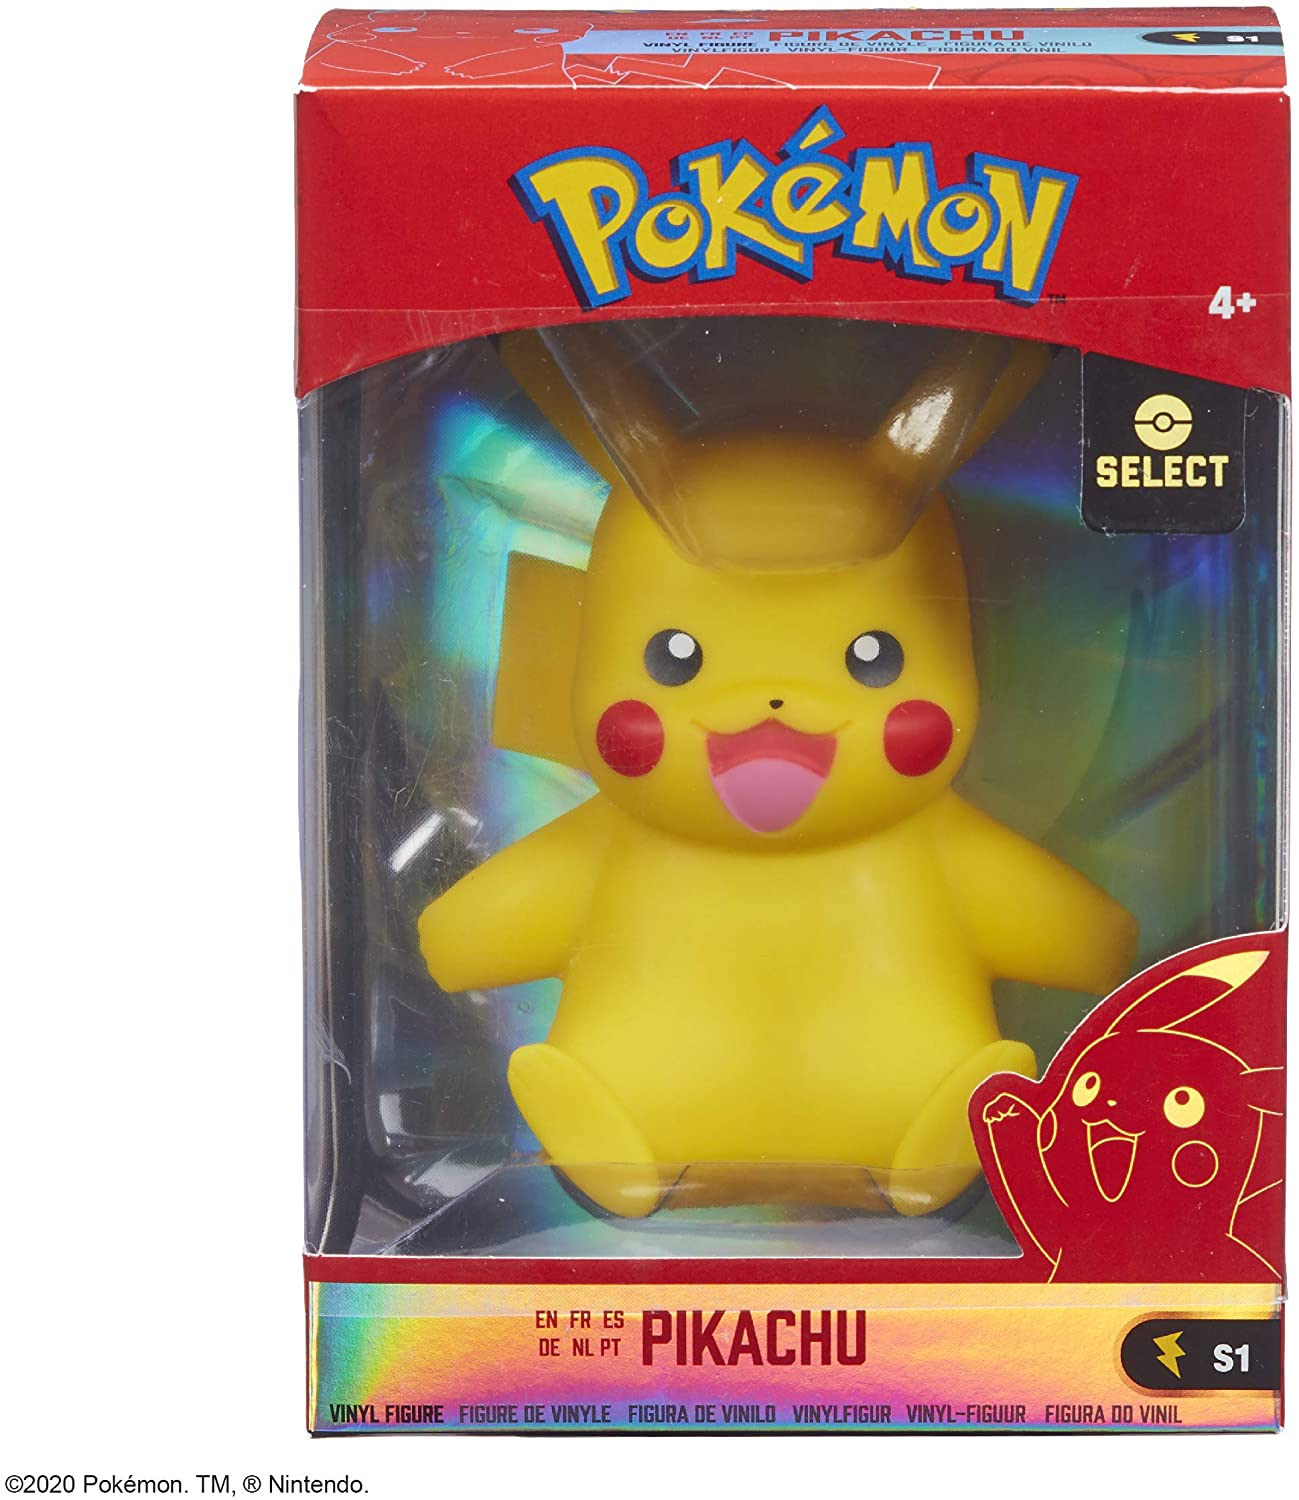 Boneco Mudkip Pokémon E Pokebola Figura Wct Sunny Brinquedos